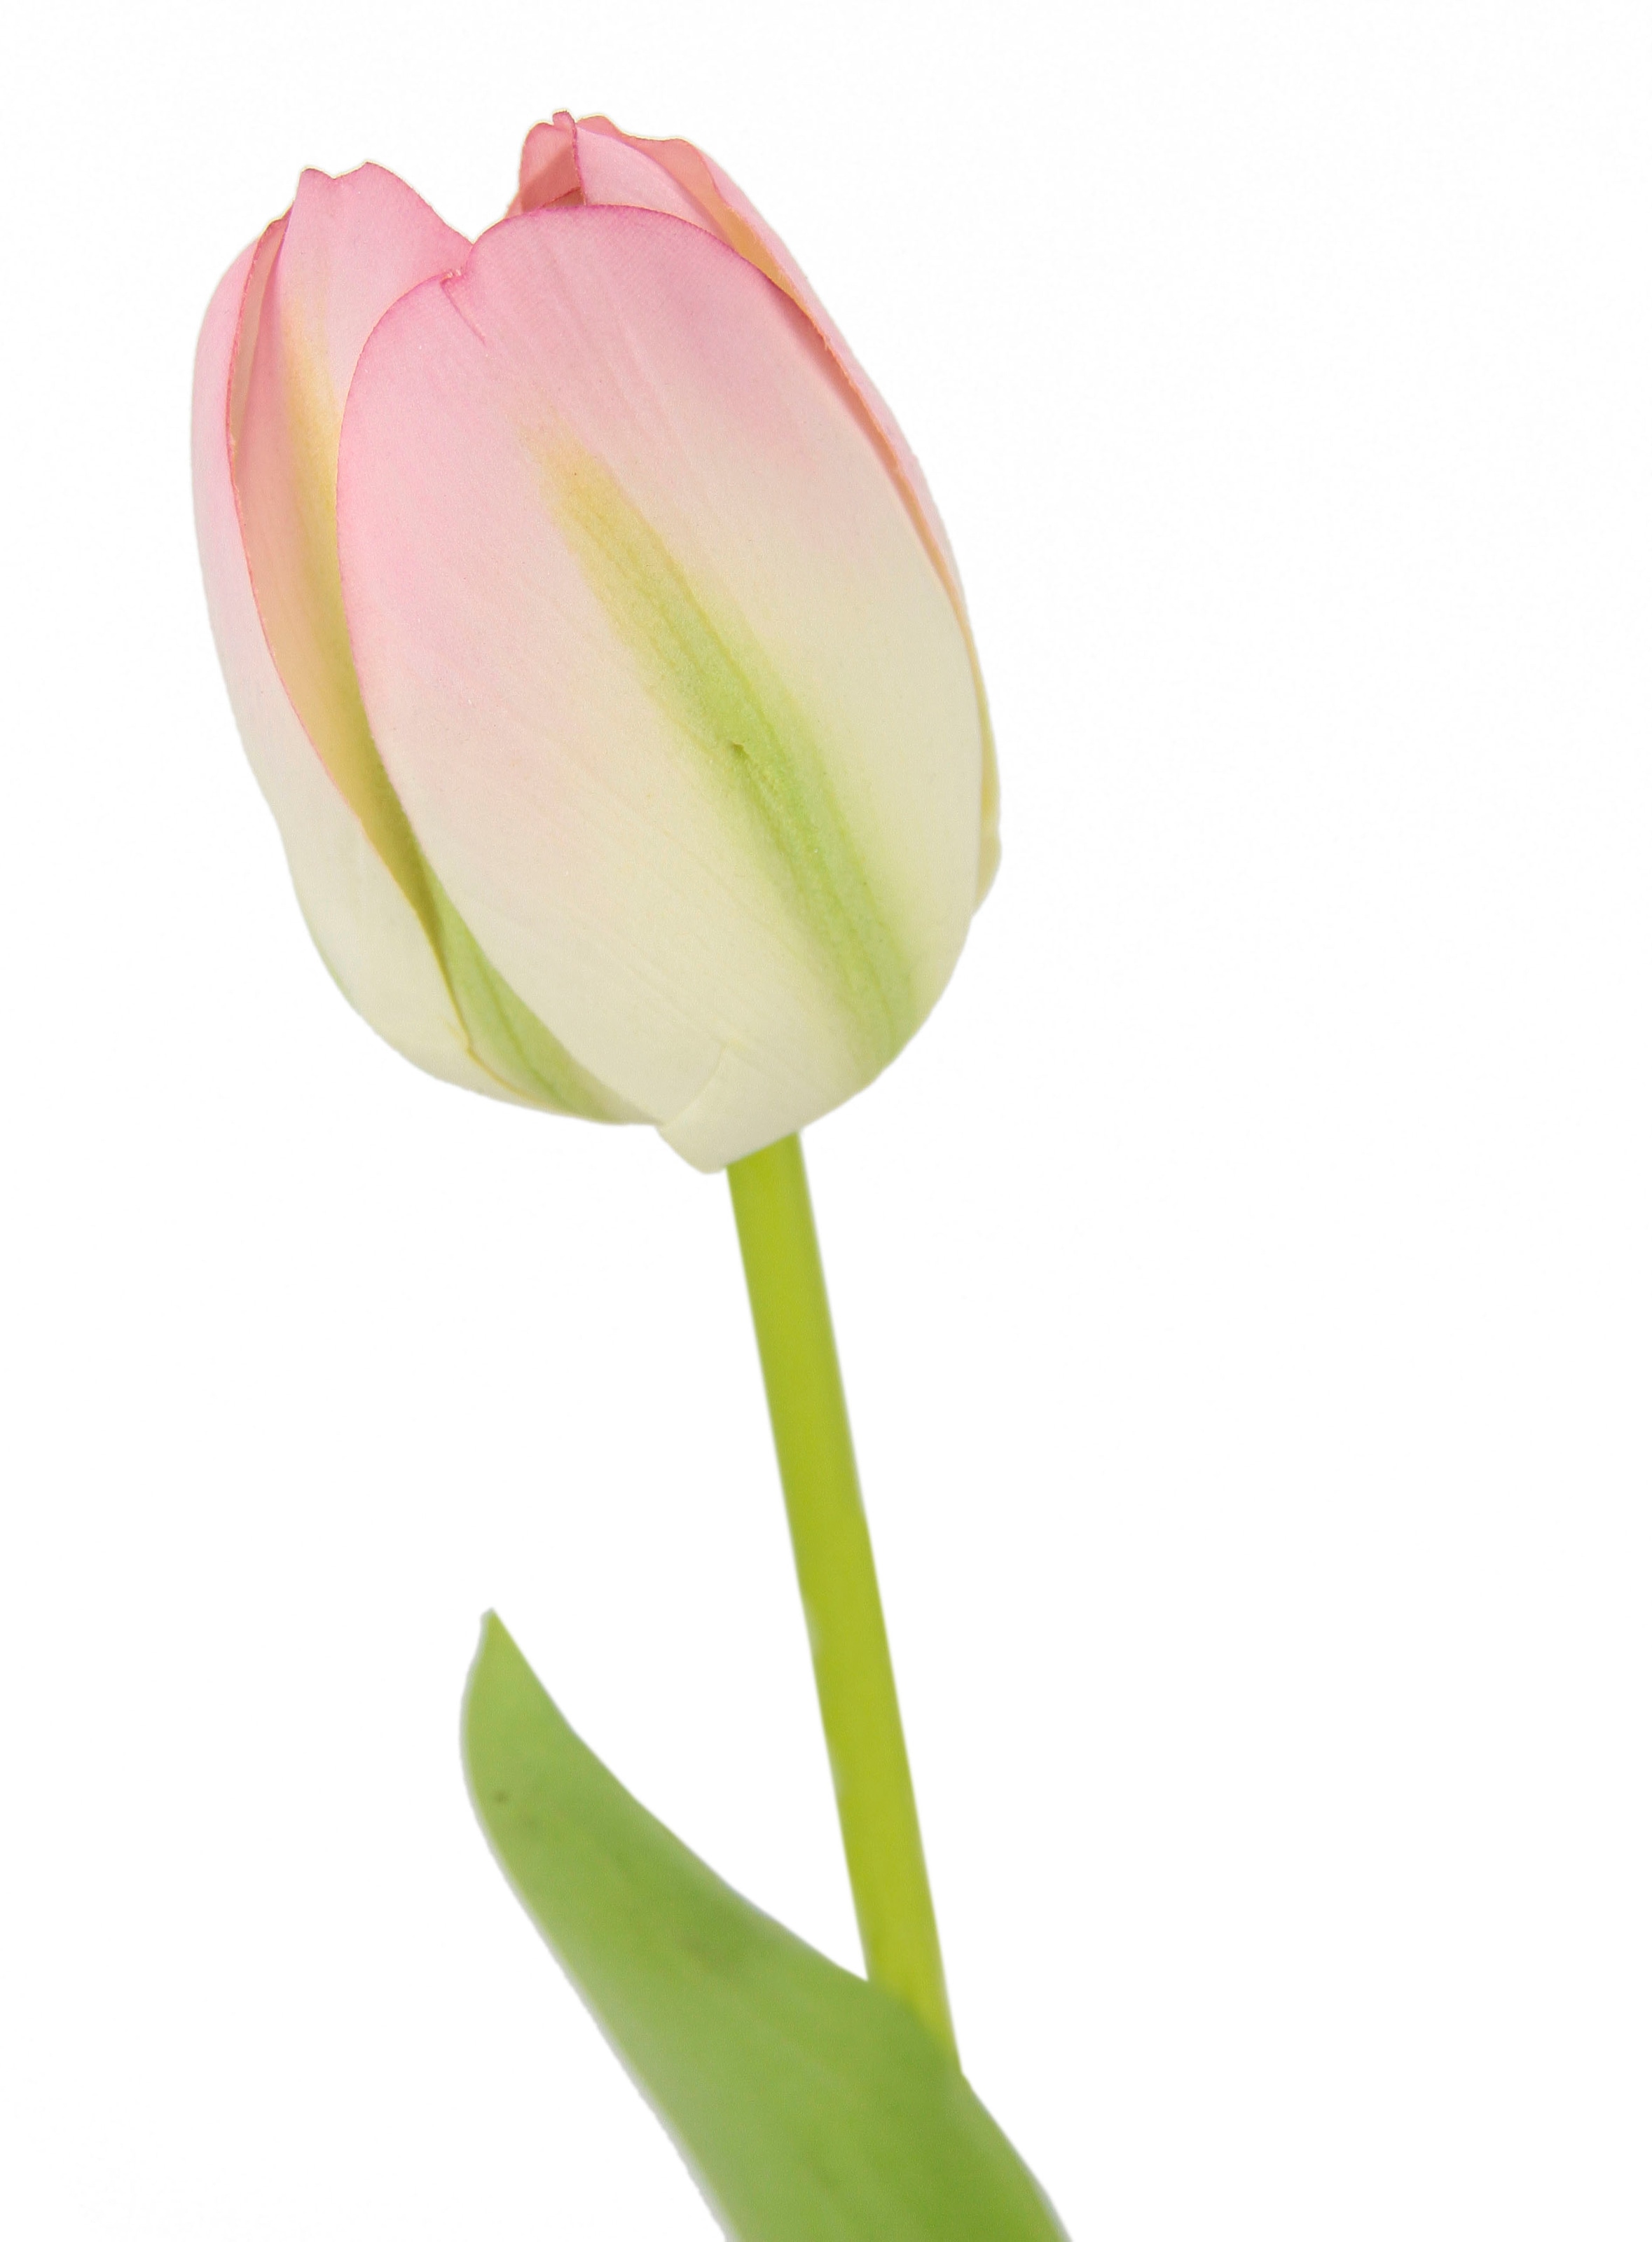 I.GE.A. Kunstblume »Real Touch Tulpen«, jetzt künstliche 5er Stielblume kaufen Set Kunstblumen, Tulpenknospen